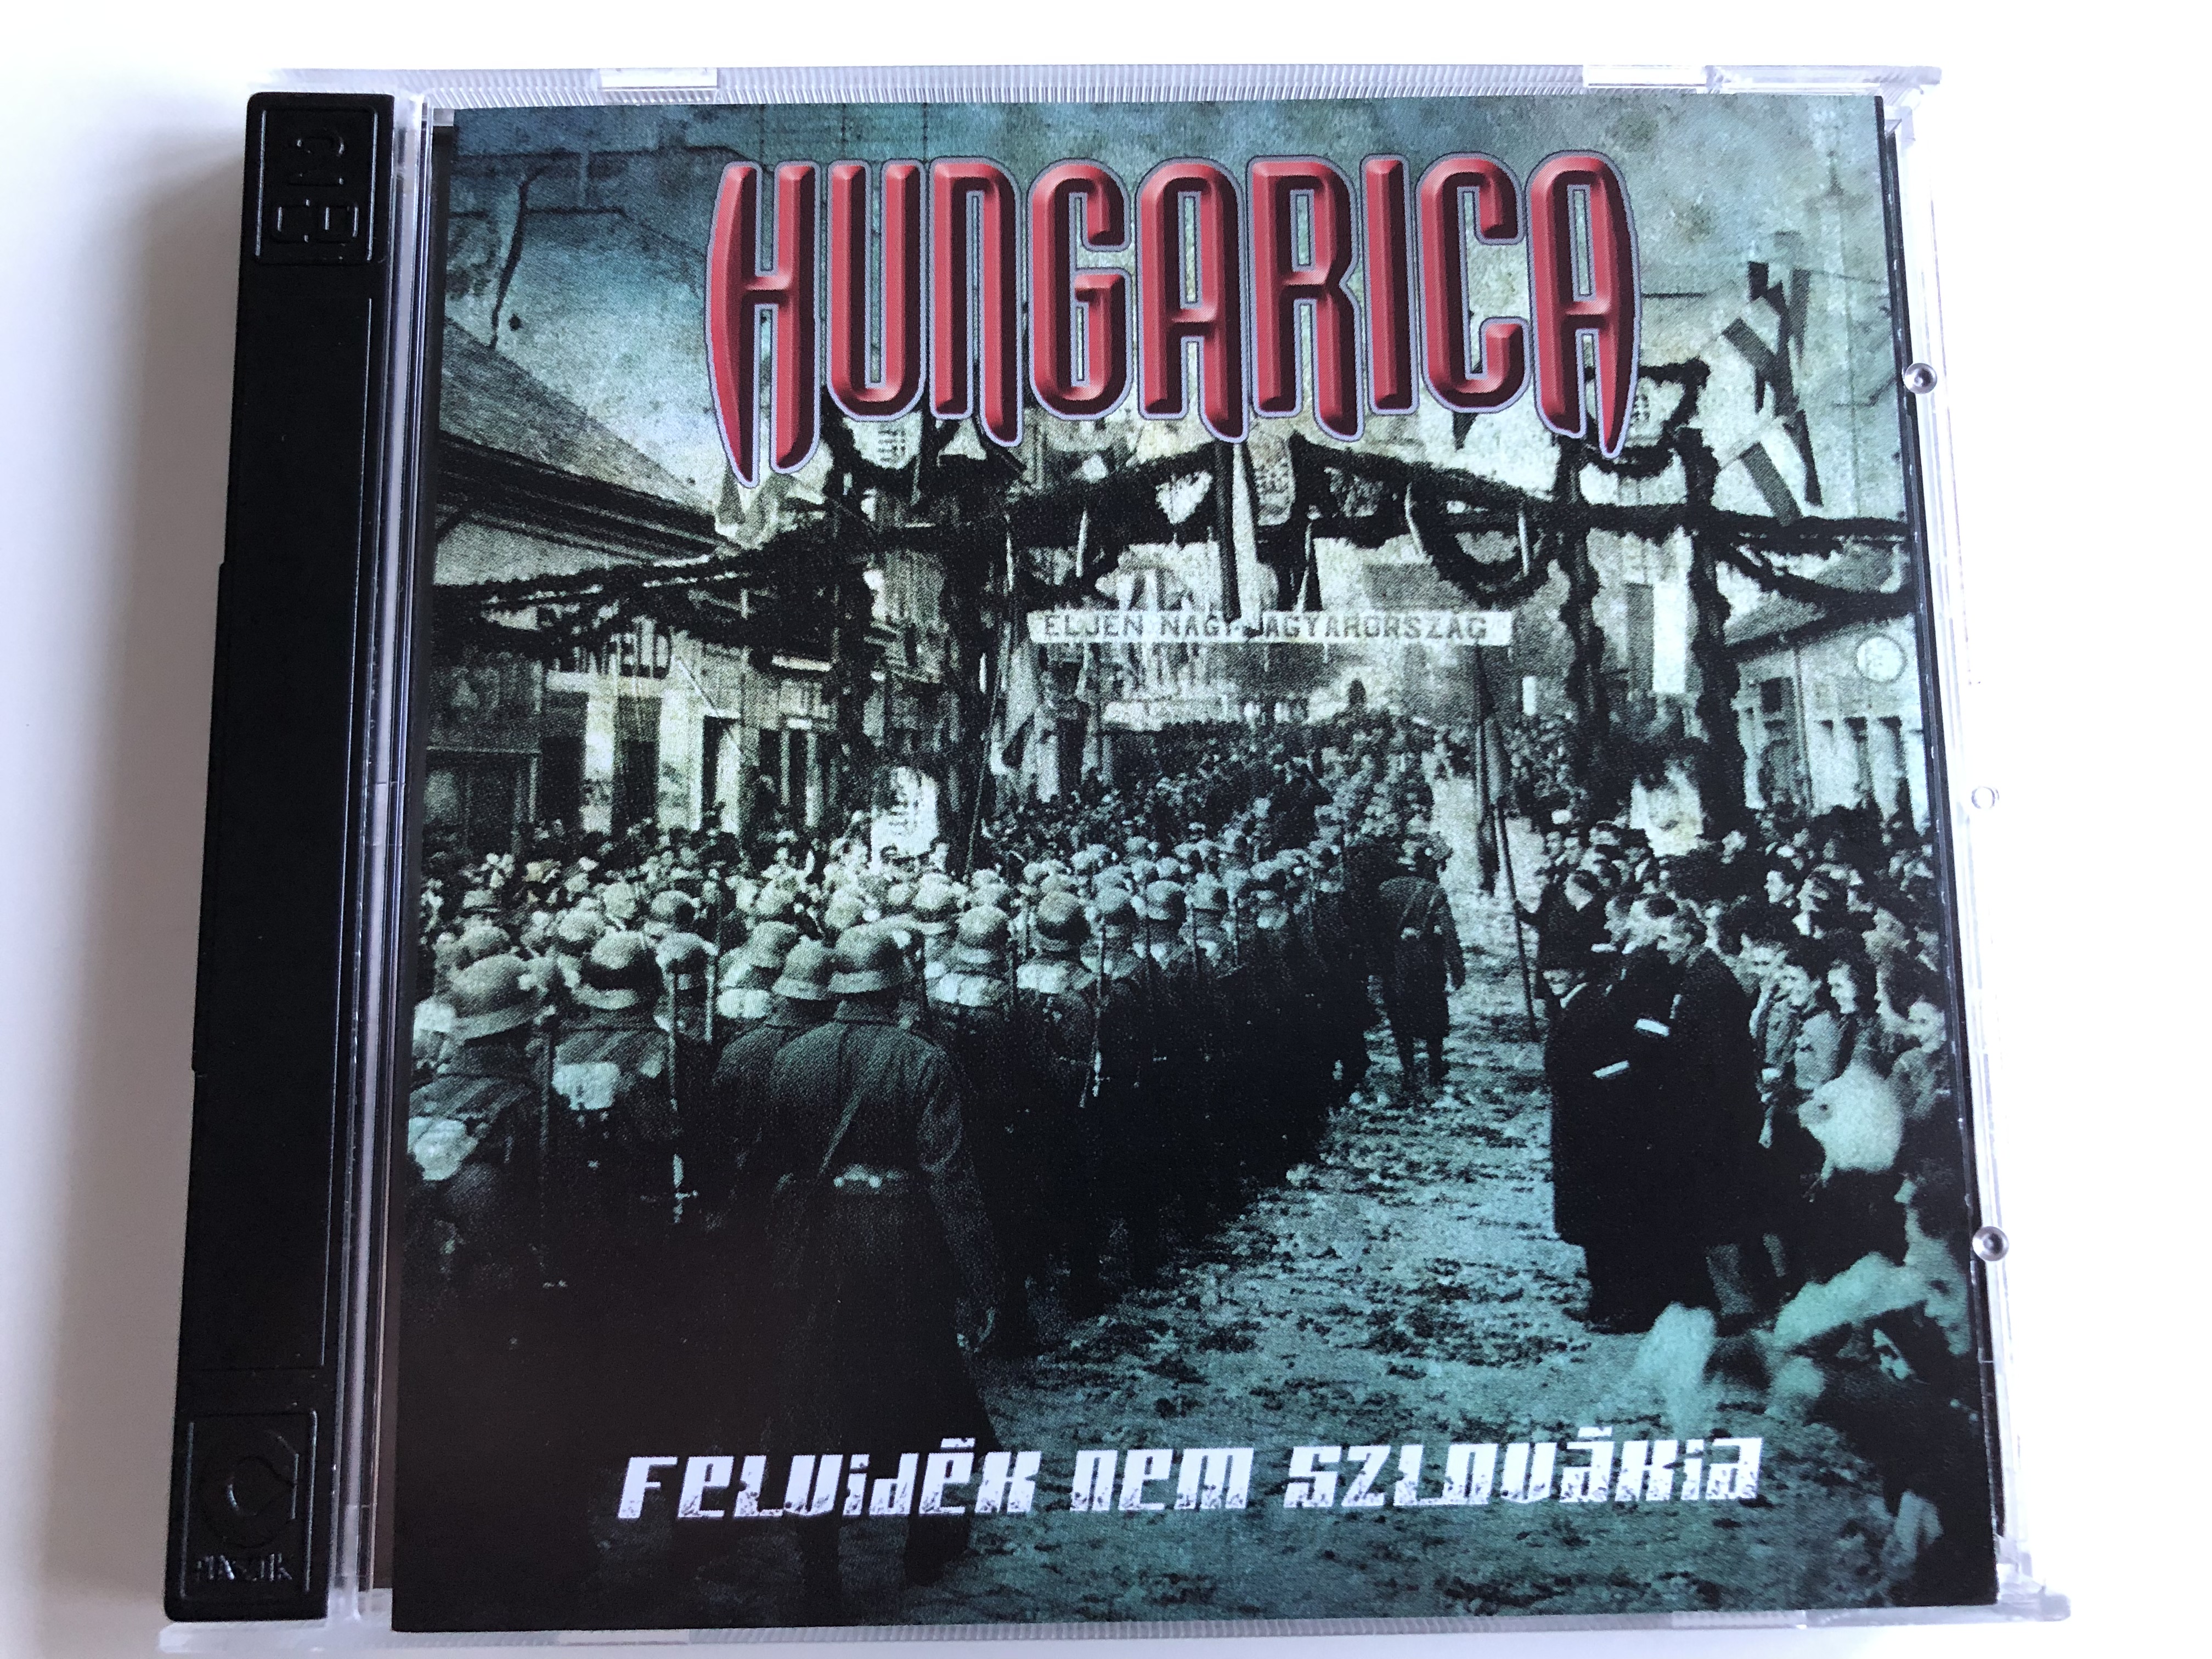 hungarica-felvid-k-nem-szlov-kia-hadak-tja-kiad-2x-audio-cd-2010-hukcd-014-1-.jpg